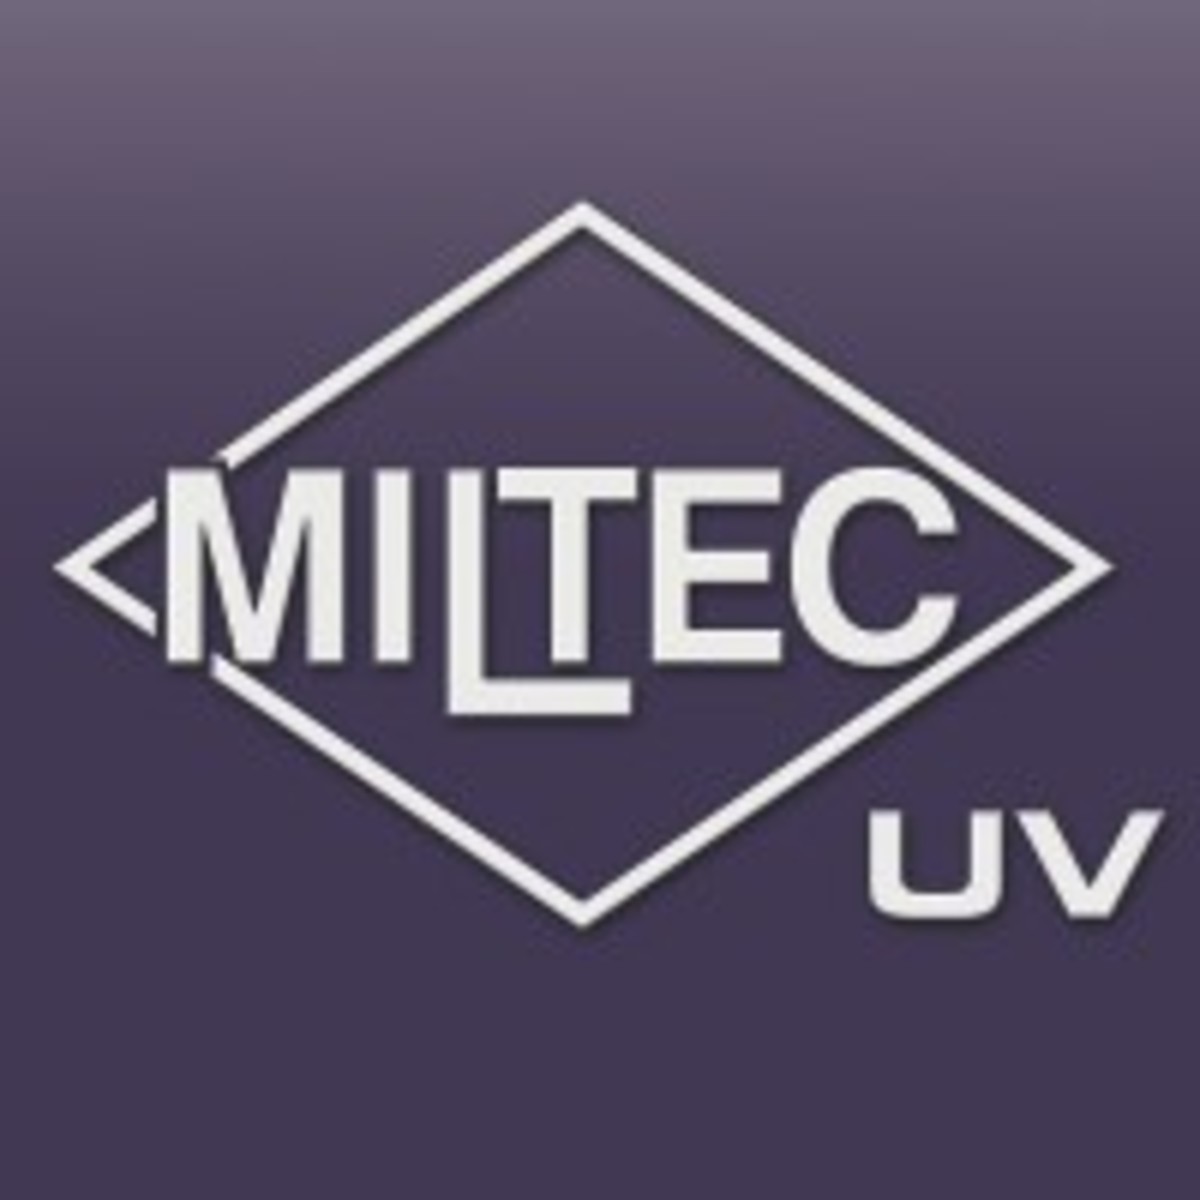 Miltec UV logo